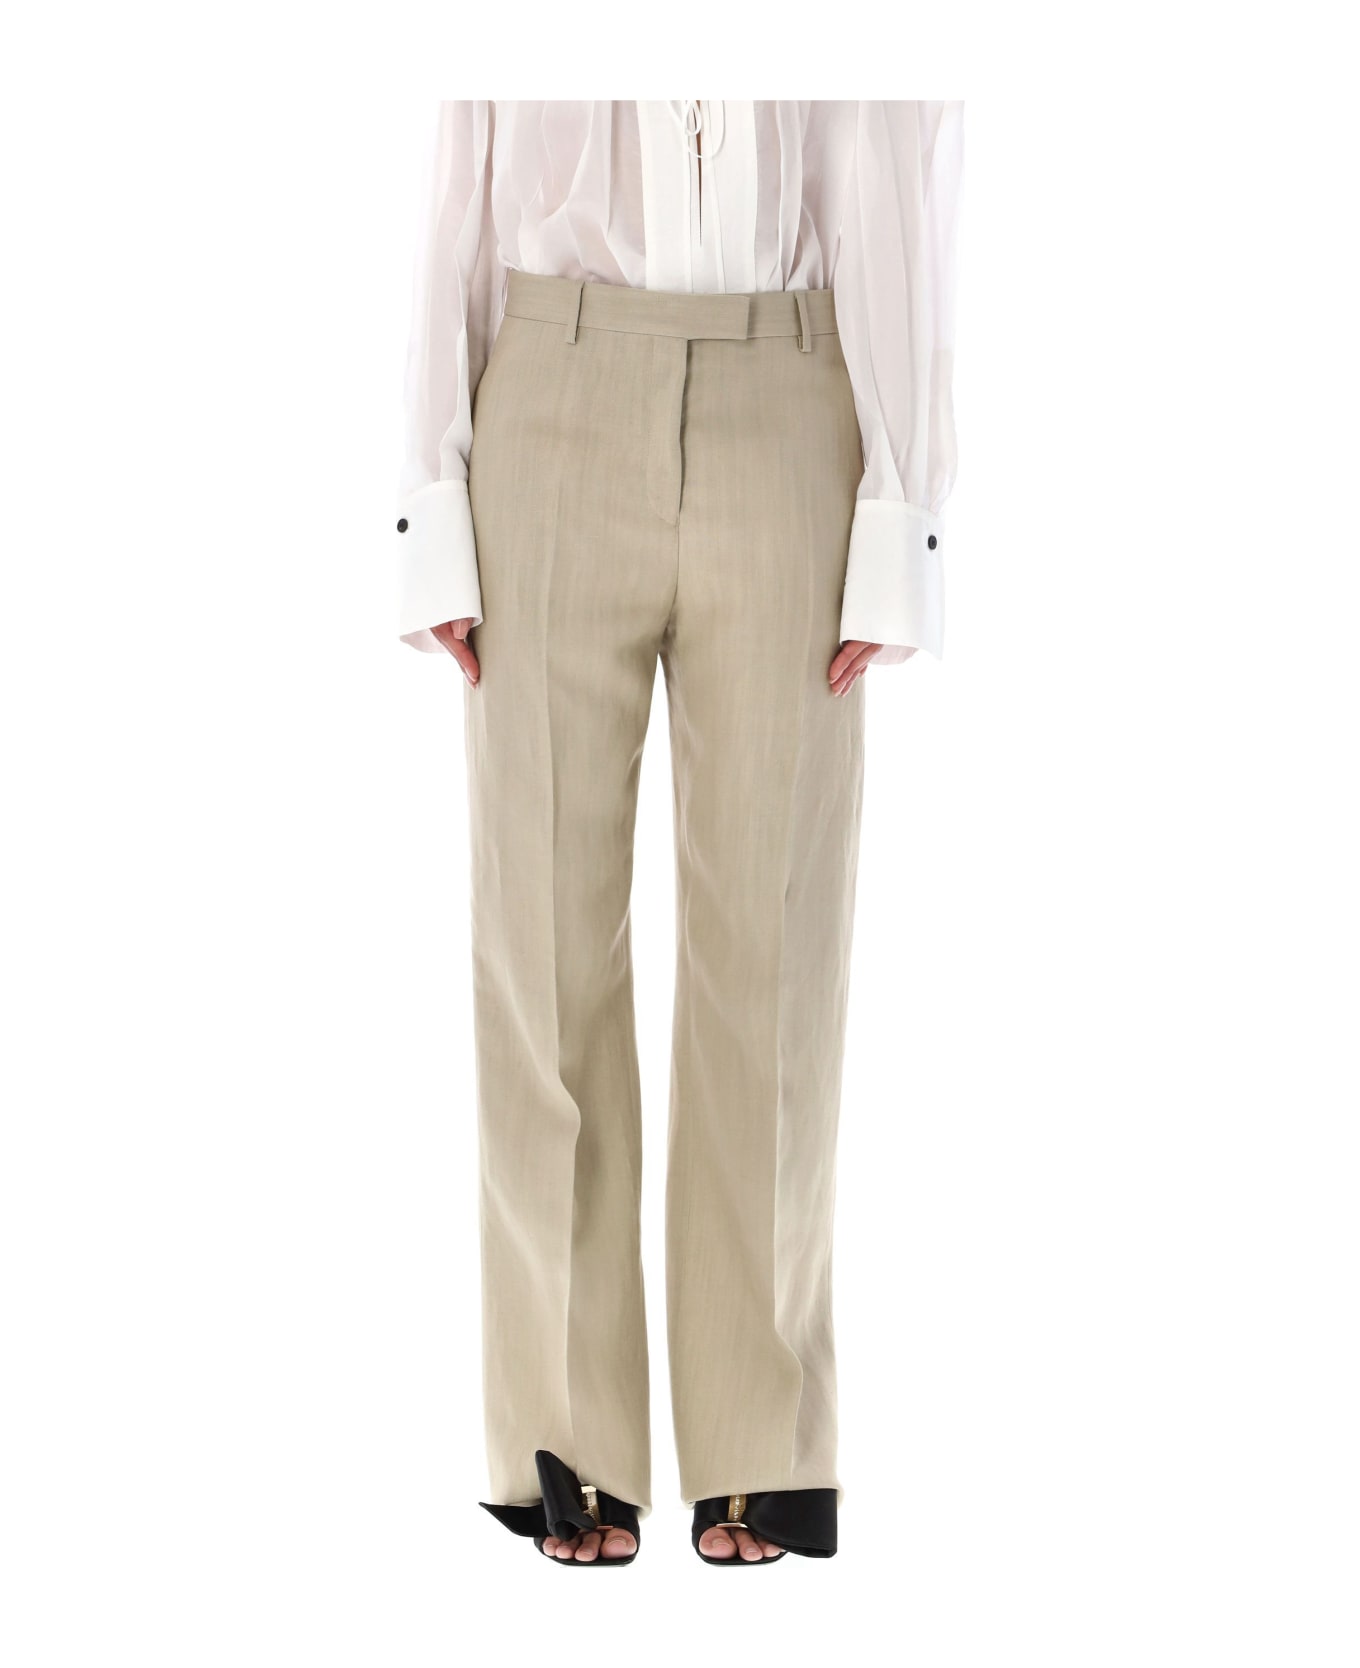 Ferragamo Linen Blend Tailored Trousers - BEIGE STONE